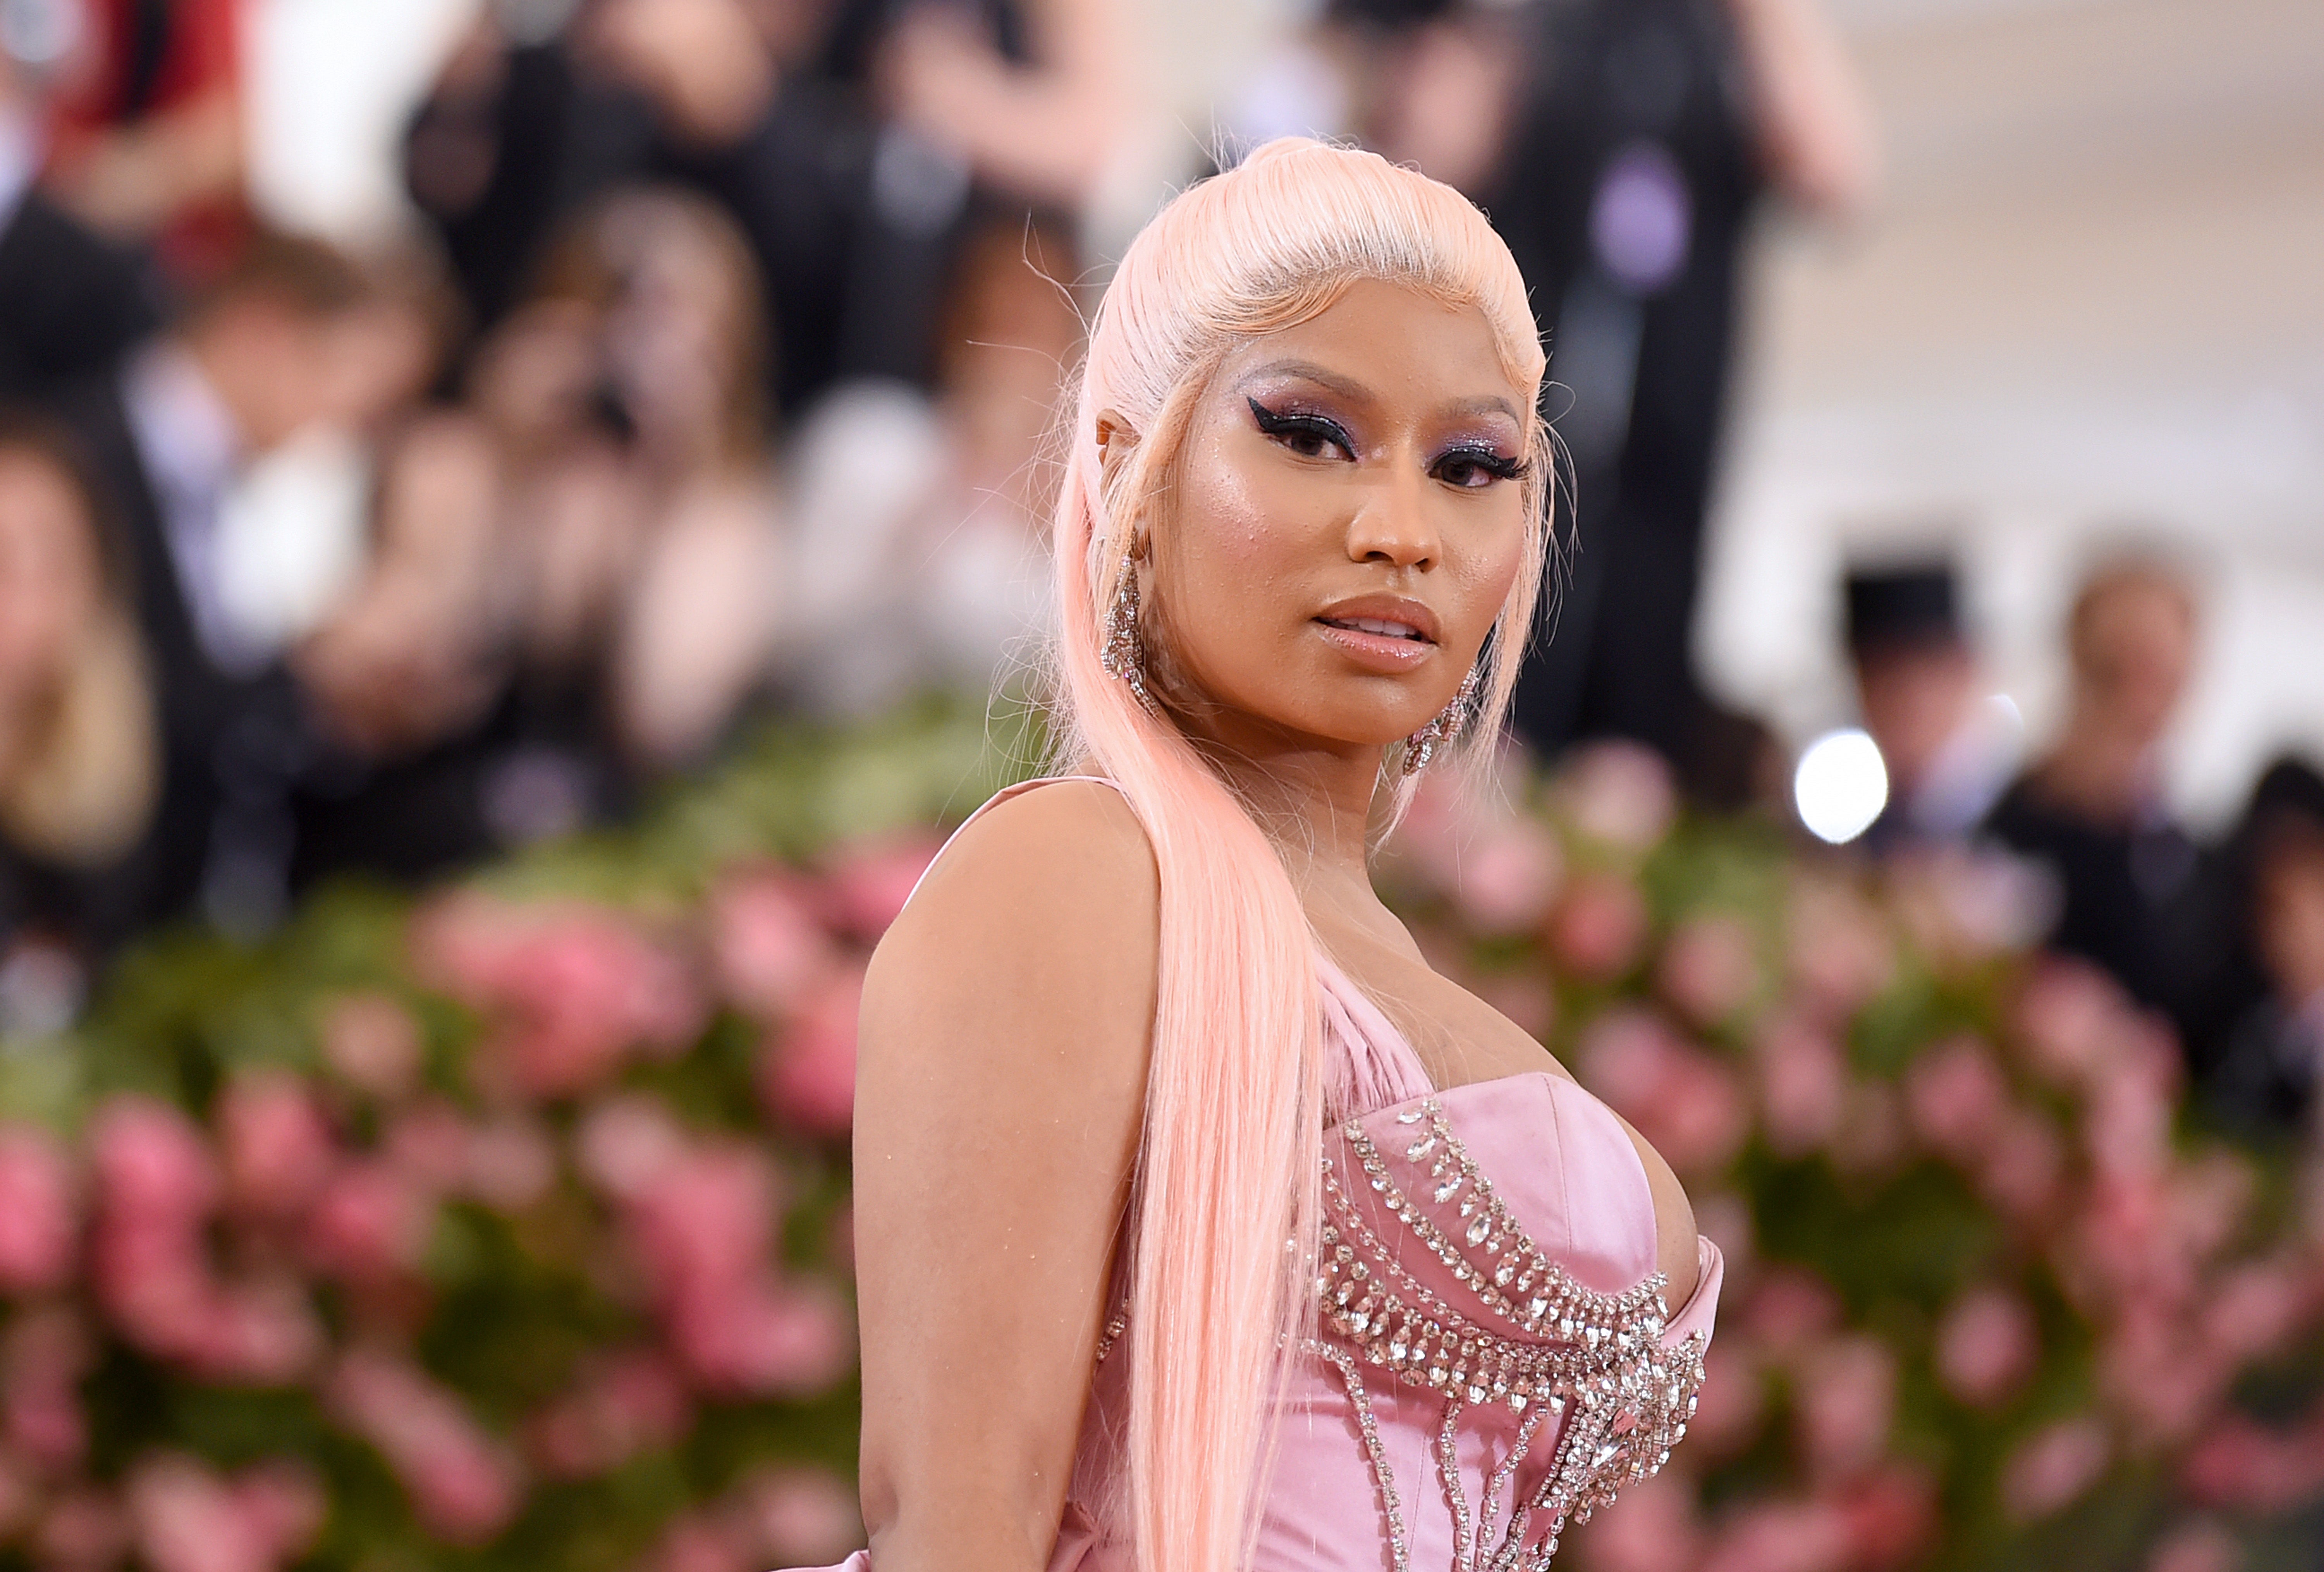 Nicki Minaj attends The 2019 Met Gala Celebrating Camp: Notes on Fashion at Metropolitan Museum of Art in 2019 in New York City